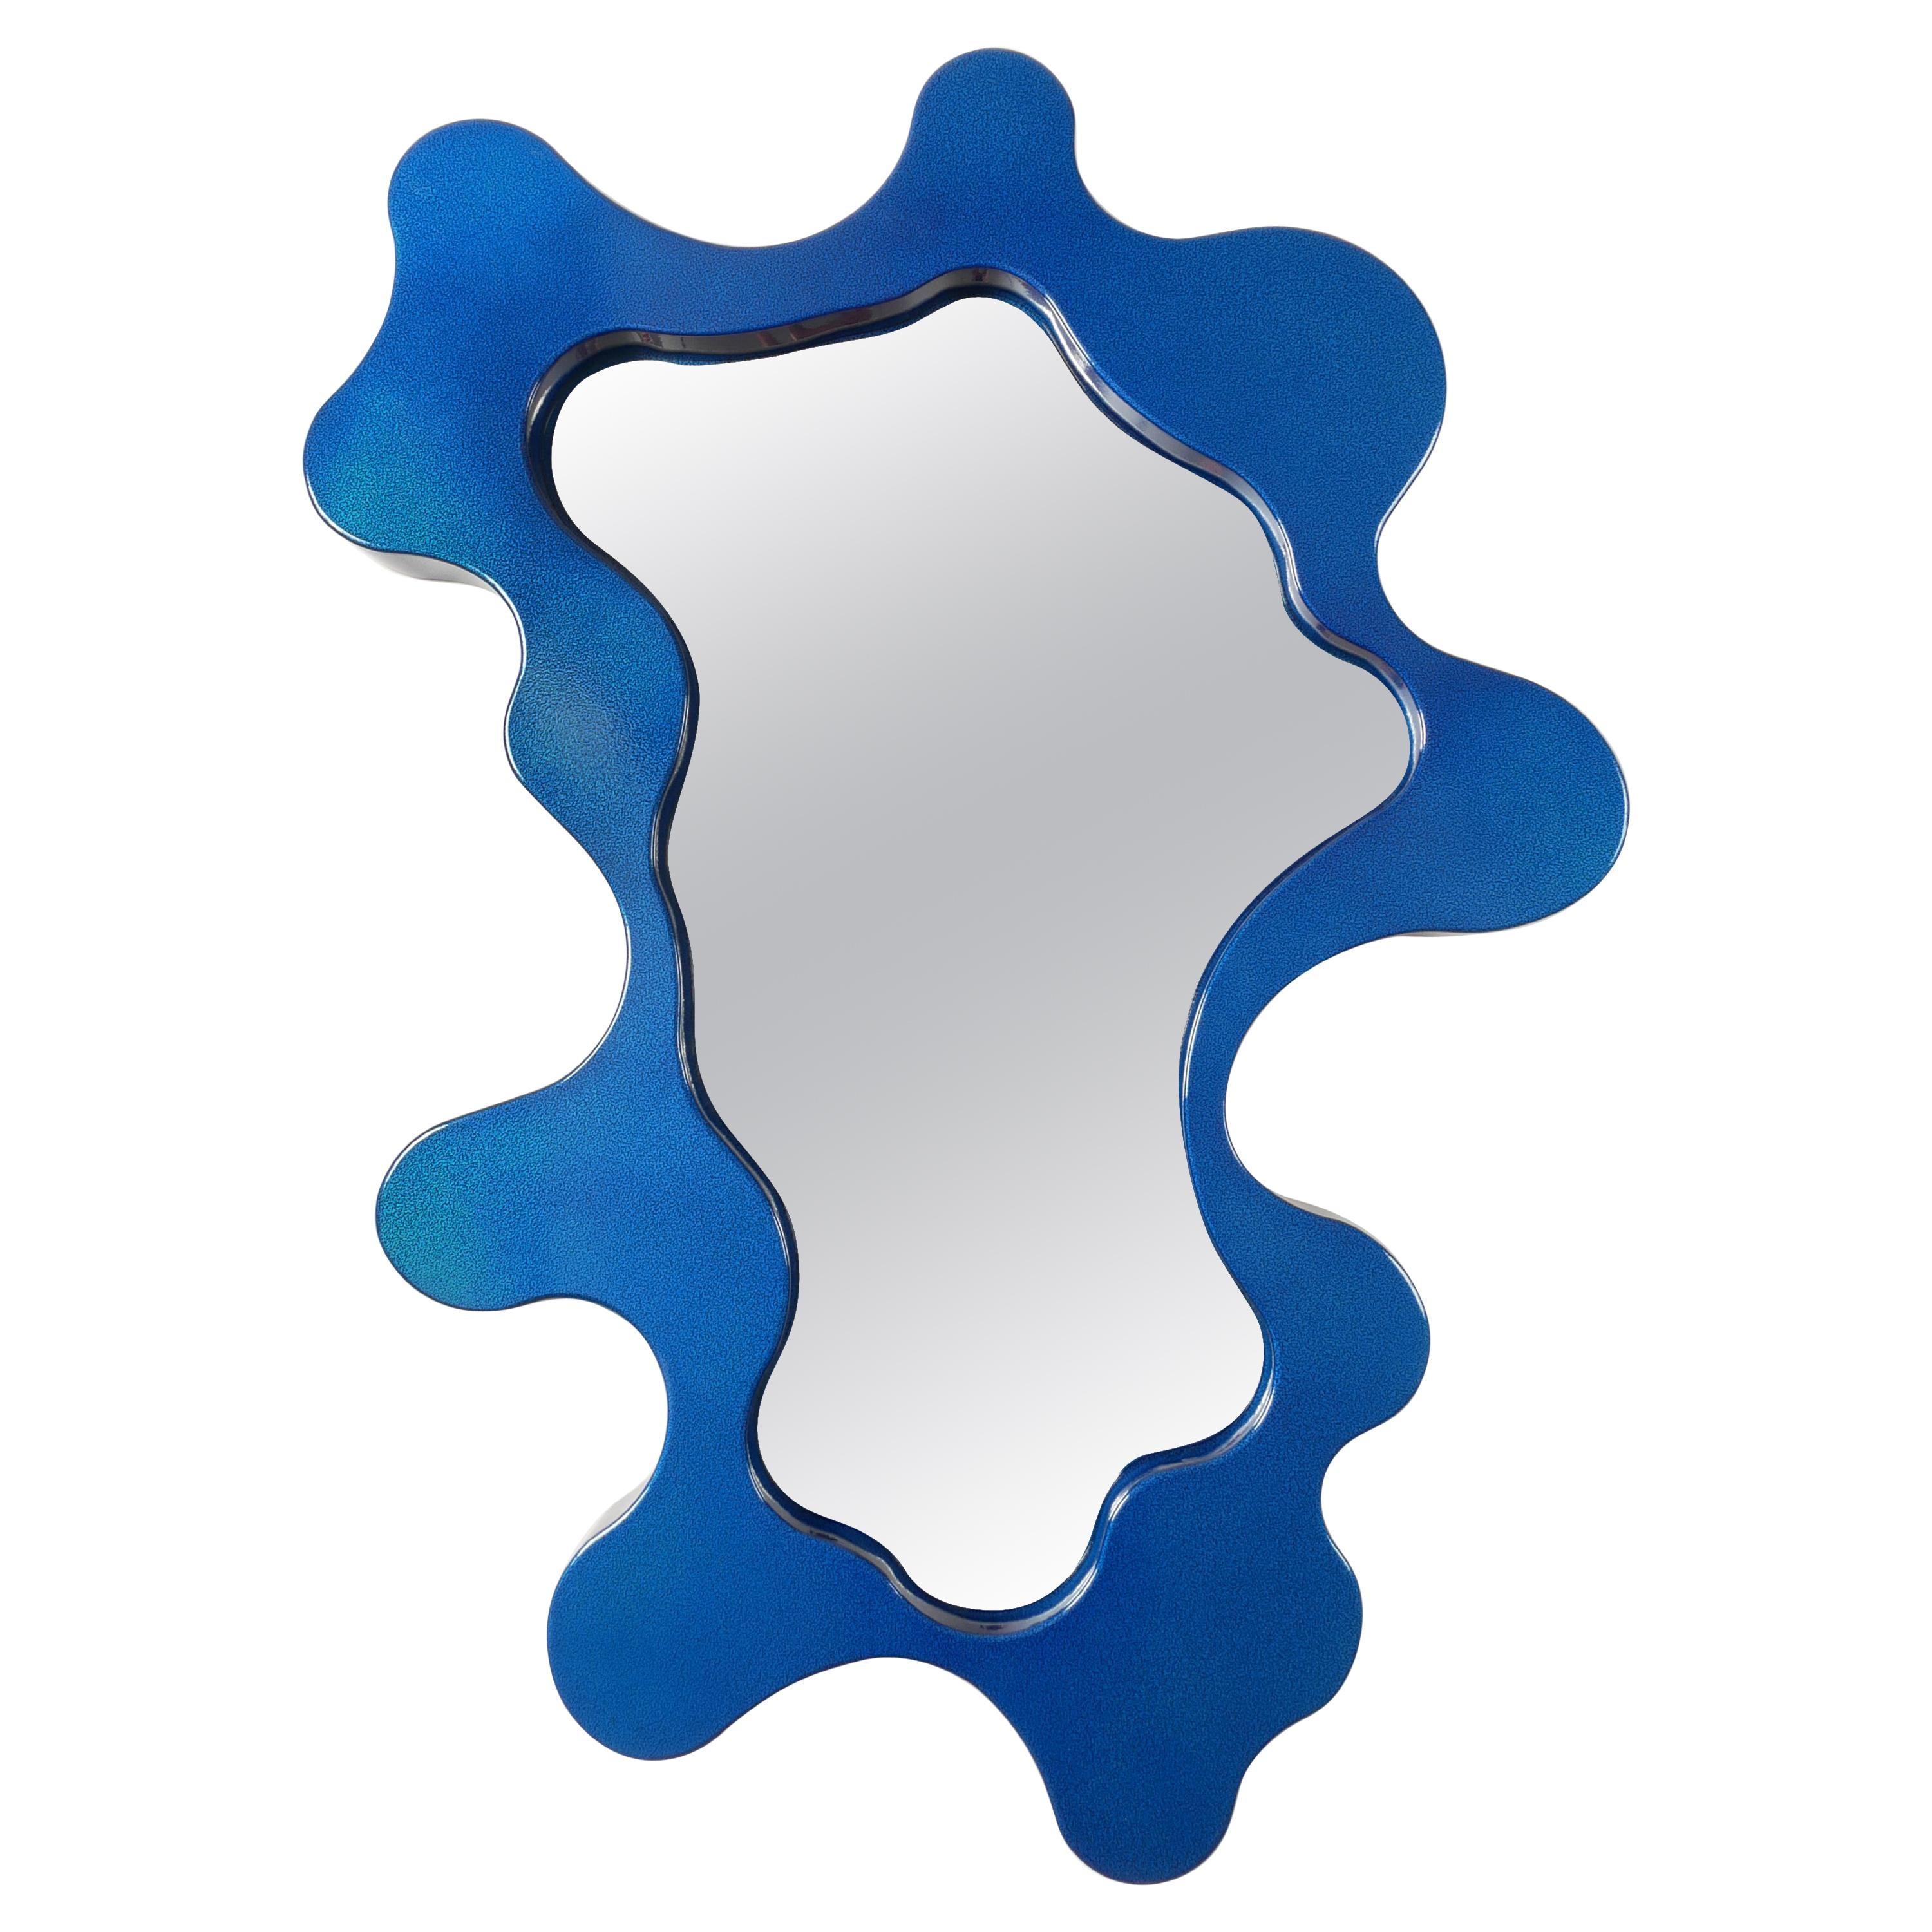 Bert Furnari Abstract Free-Form Aluminum Mirror, Bespoke Blue Finish